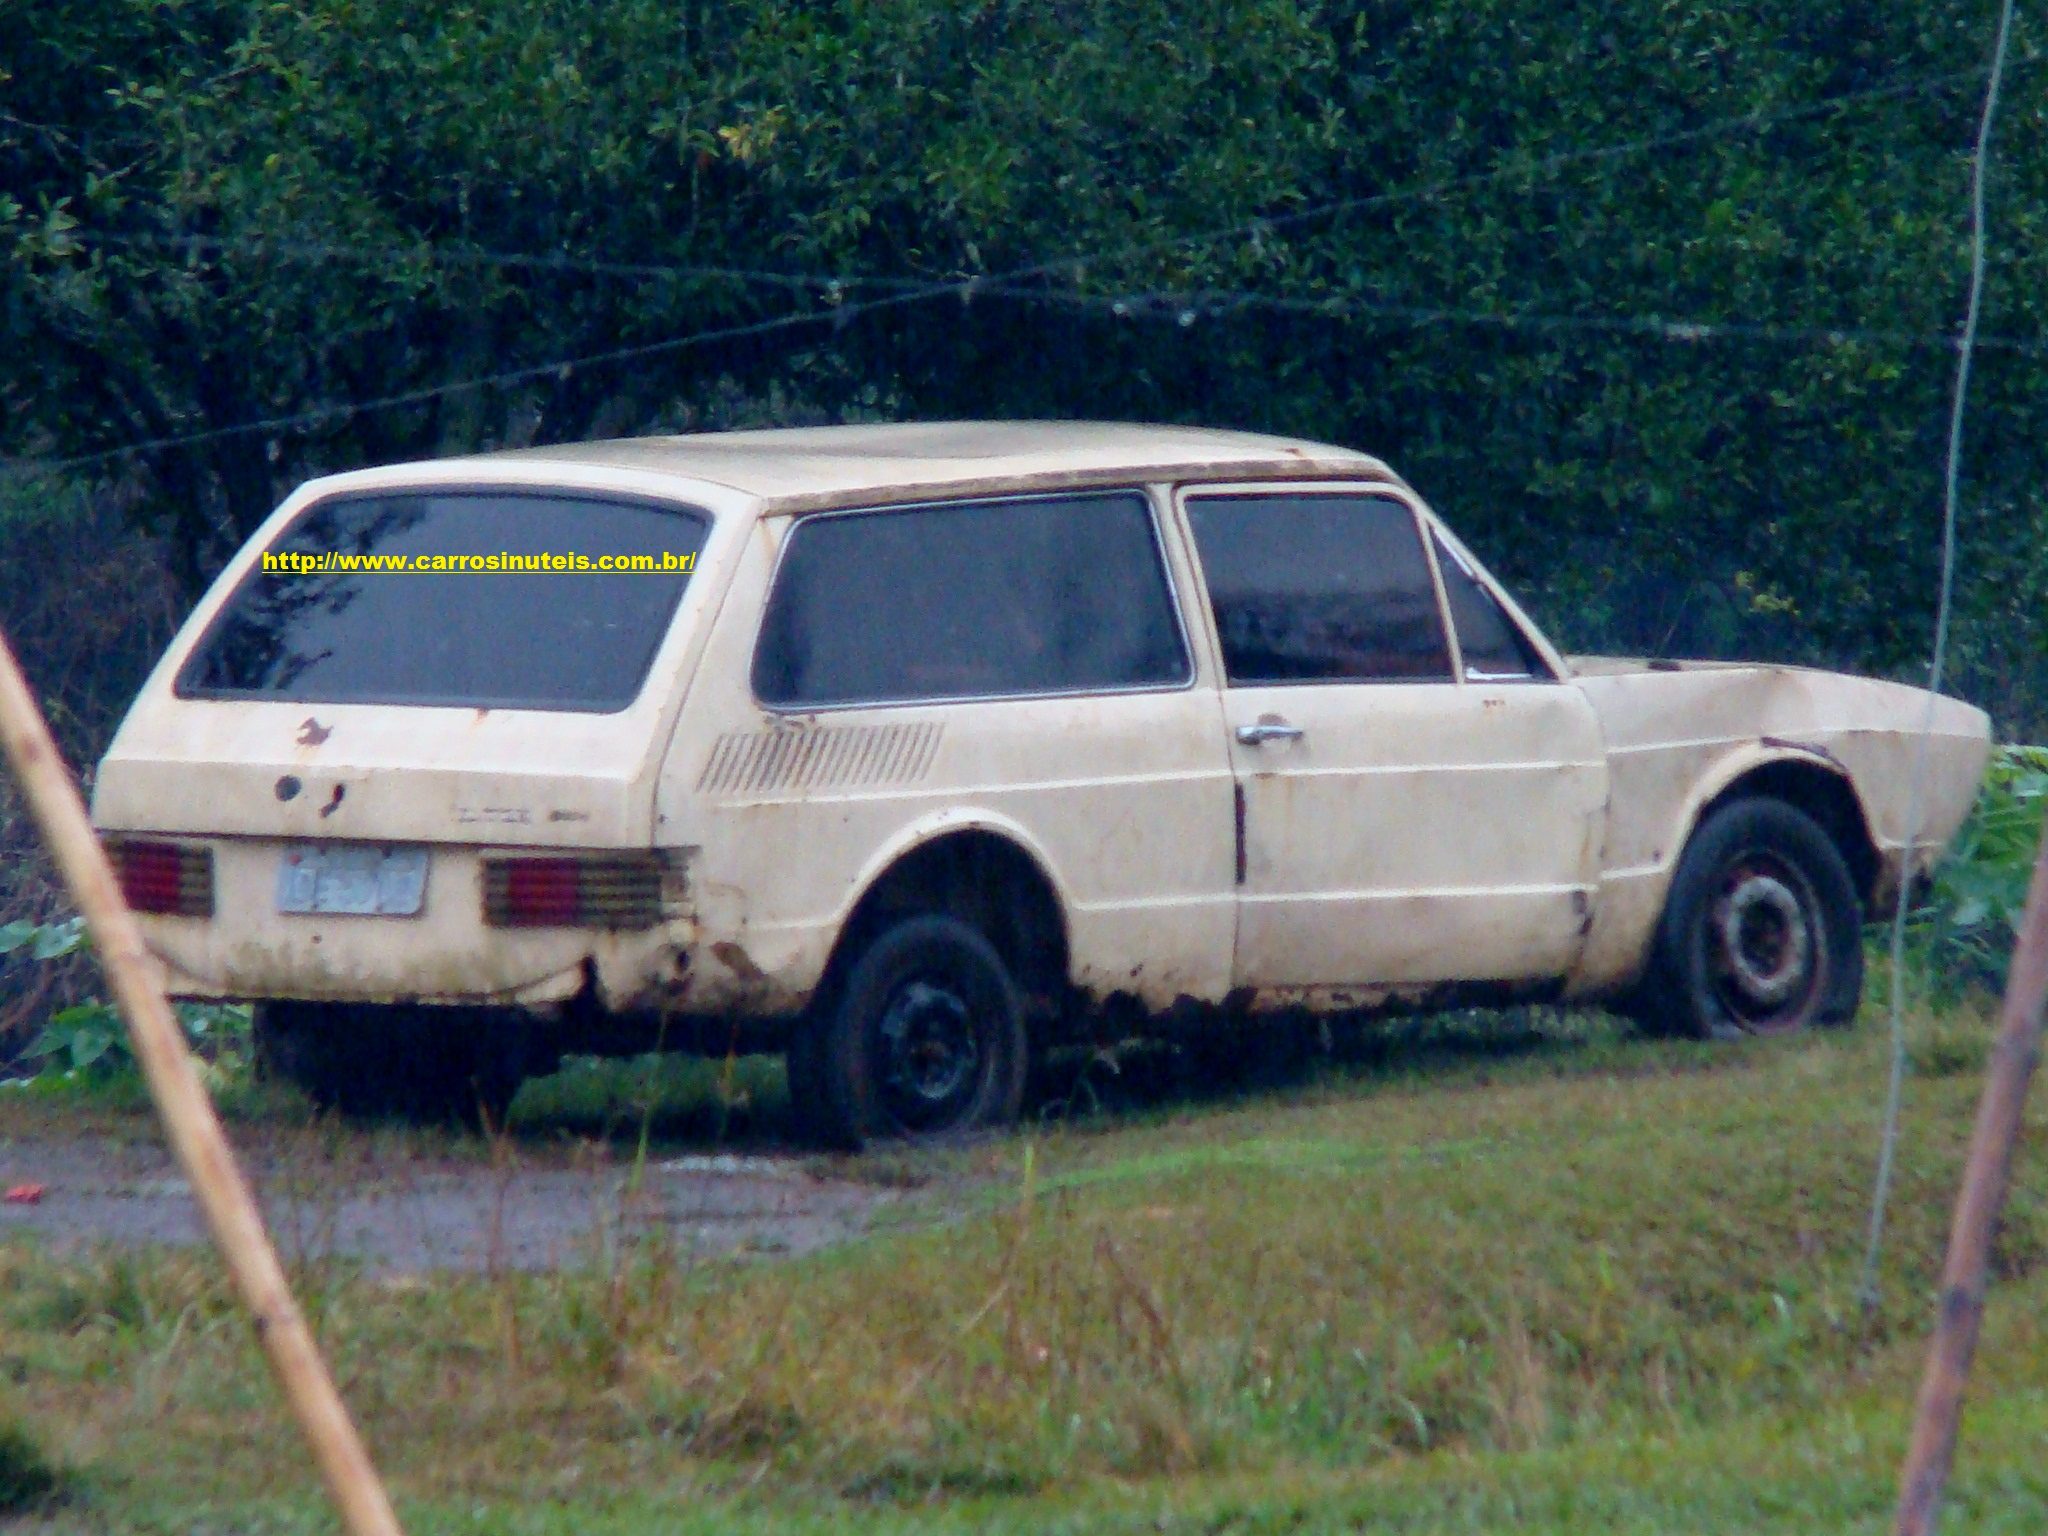 VW Variant II